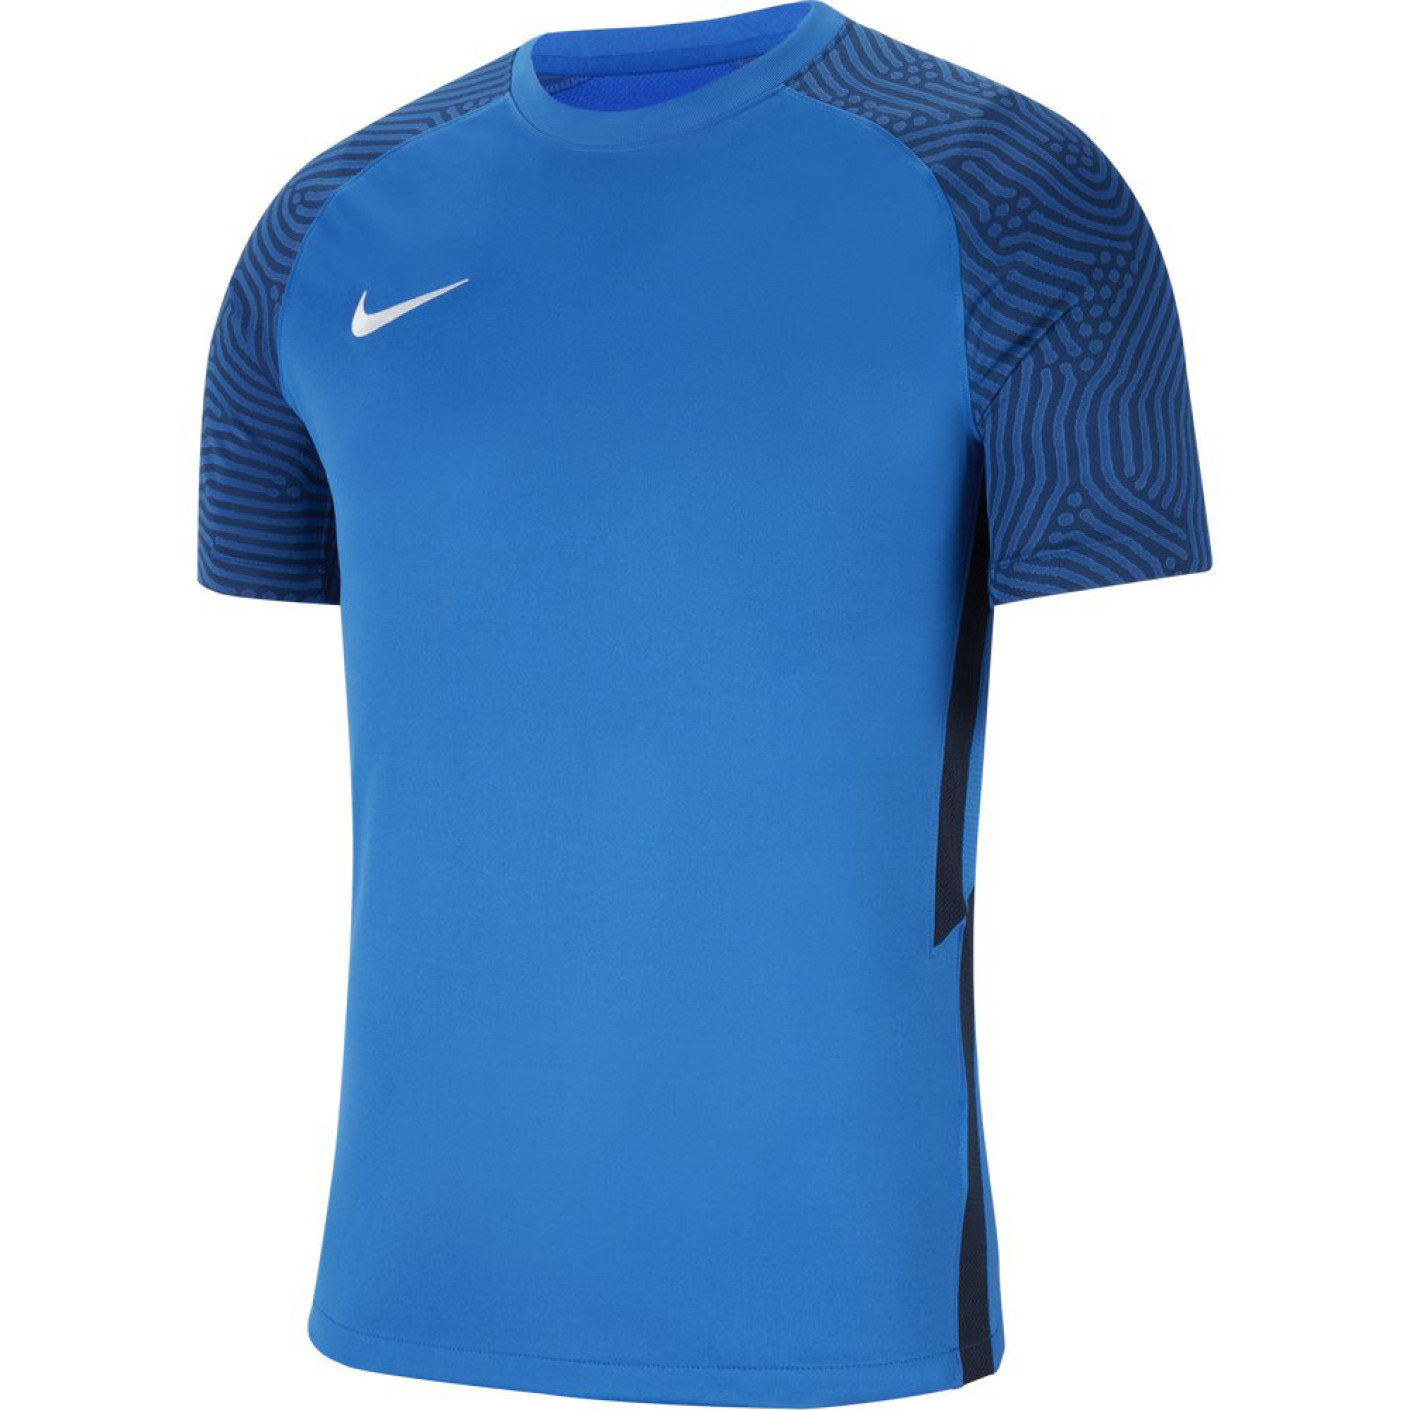 Maillot de football Nike Dri-Fit Strike II pour enfant bleu roi